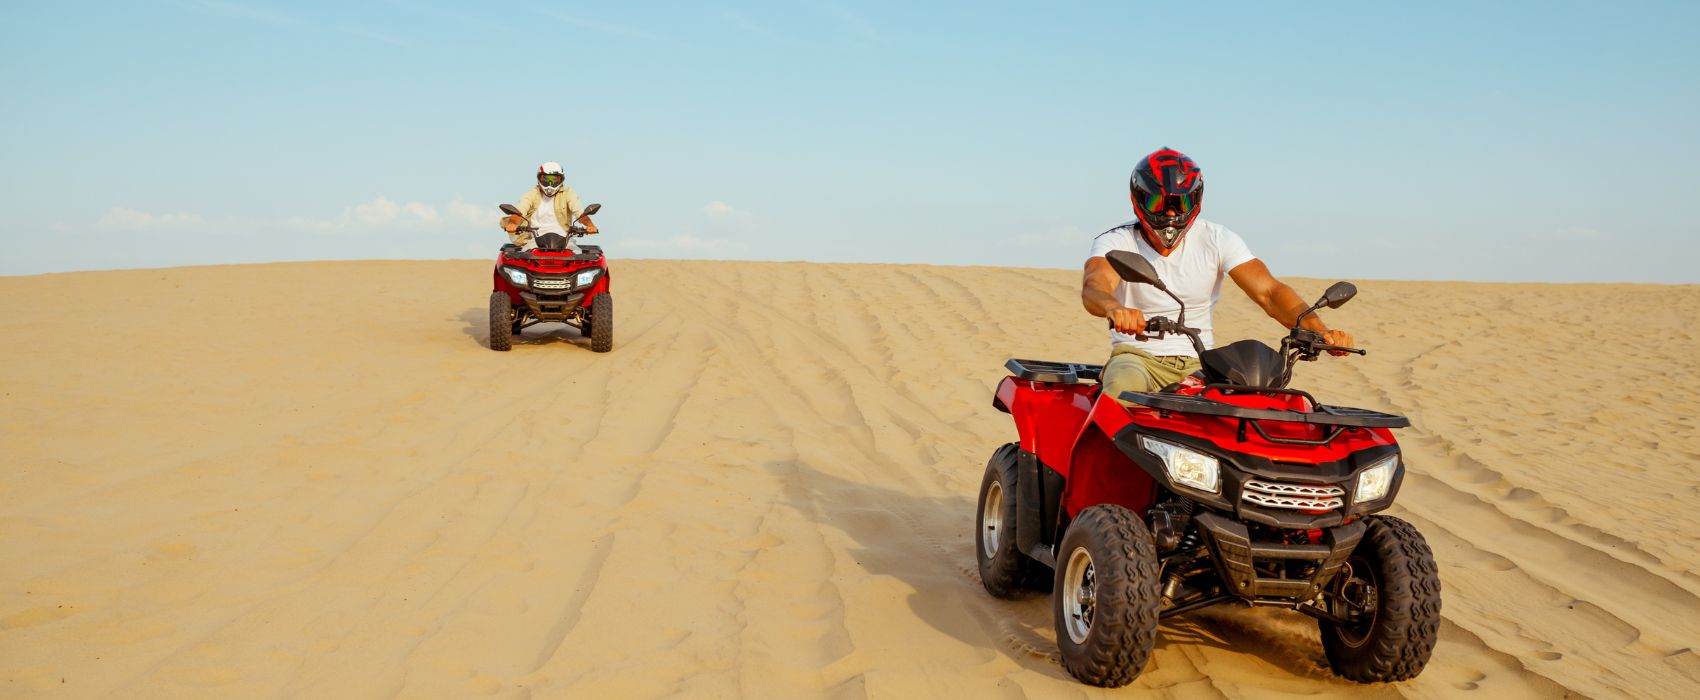 Desert Safari with quad bike